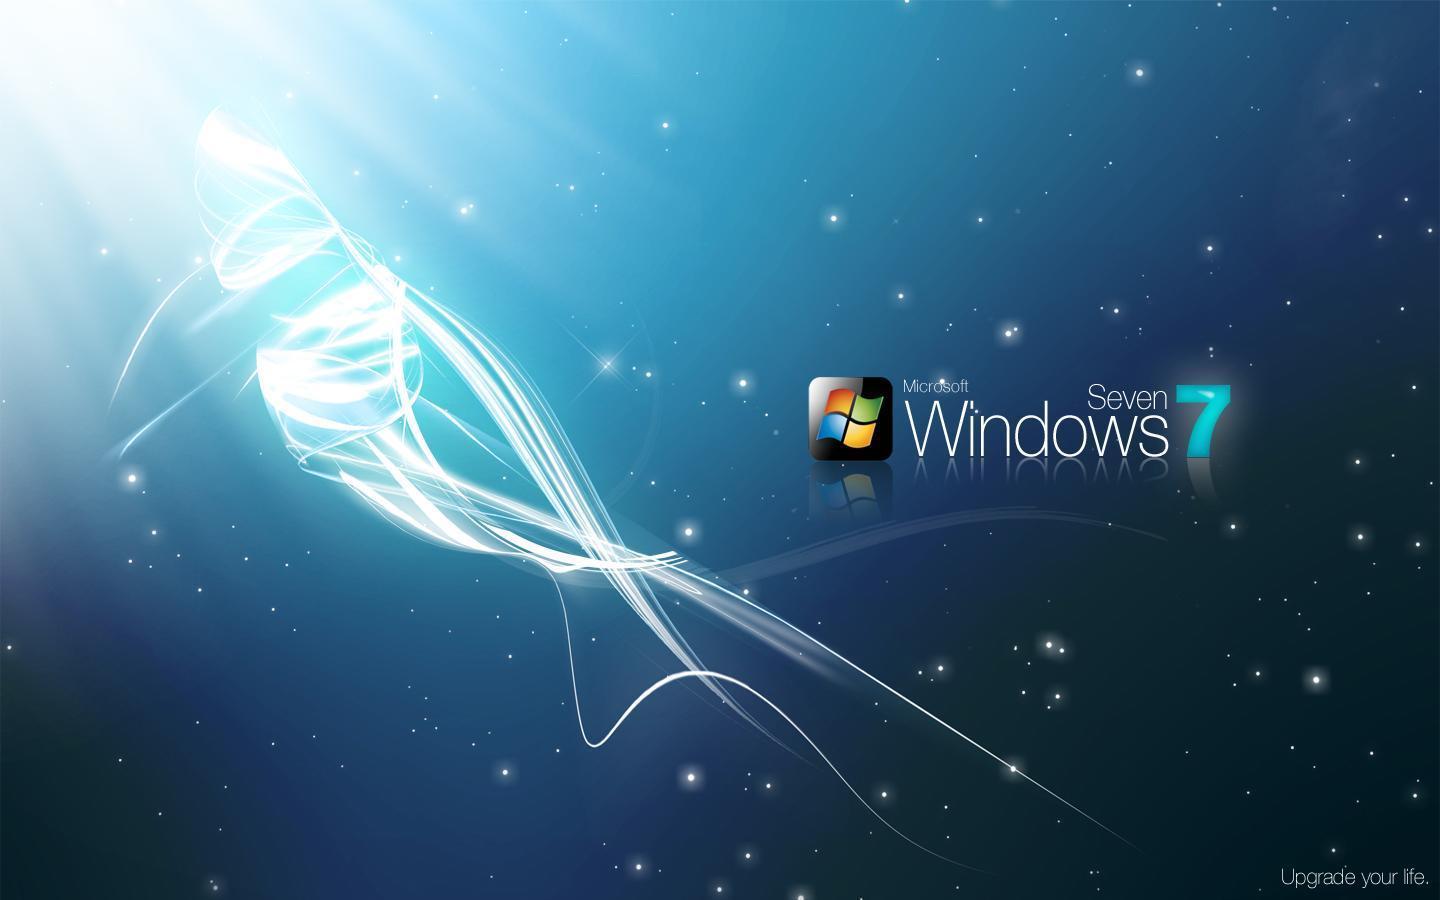 Free Windows 7 Wallpaper Download